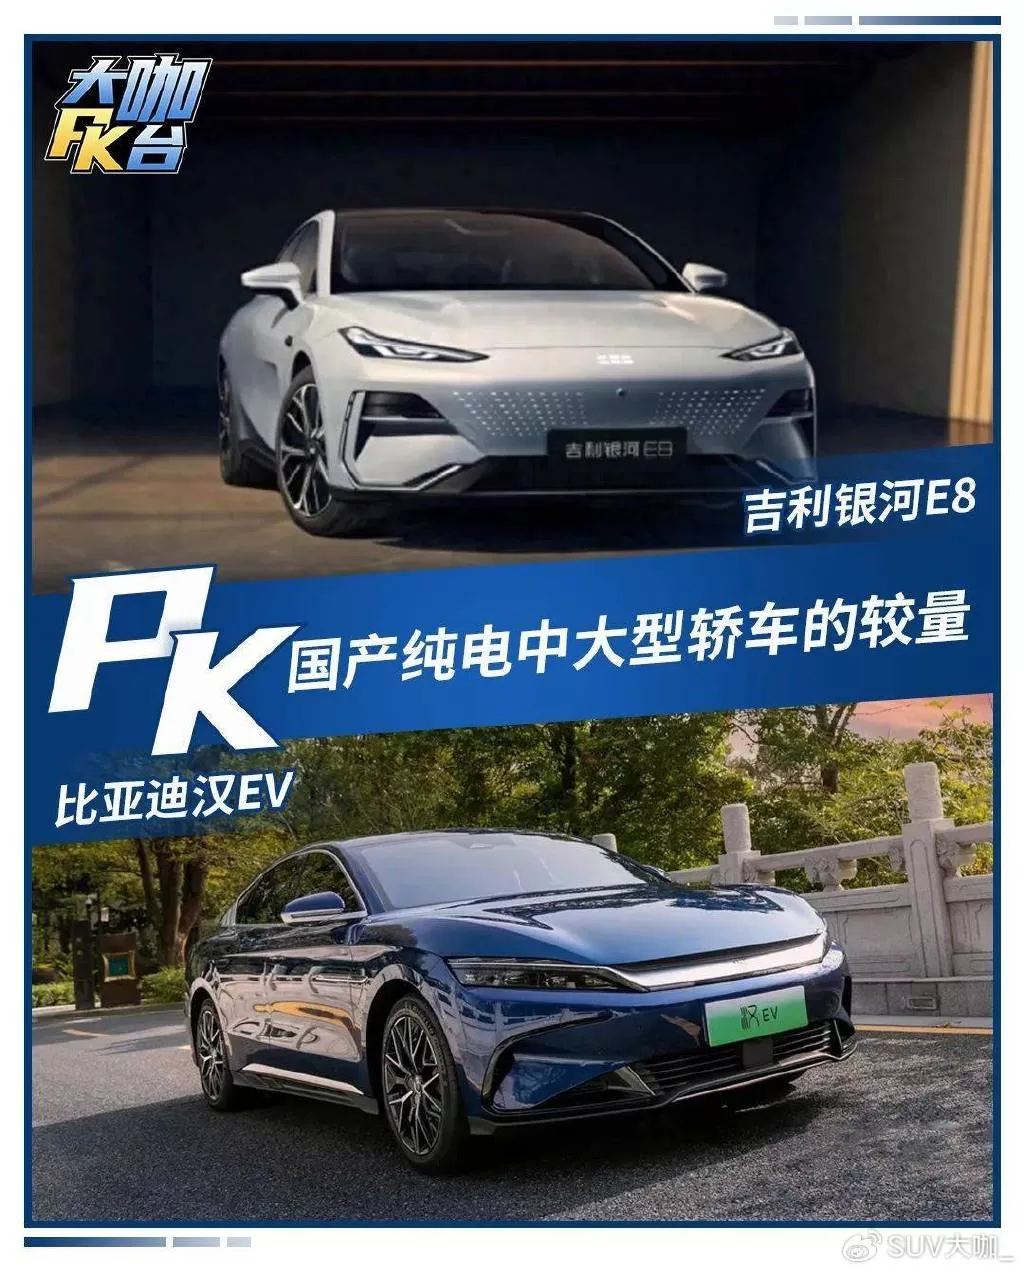 Galaxy E8 vs BYD Han EV: New Electric Car Showdown & Comparison